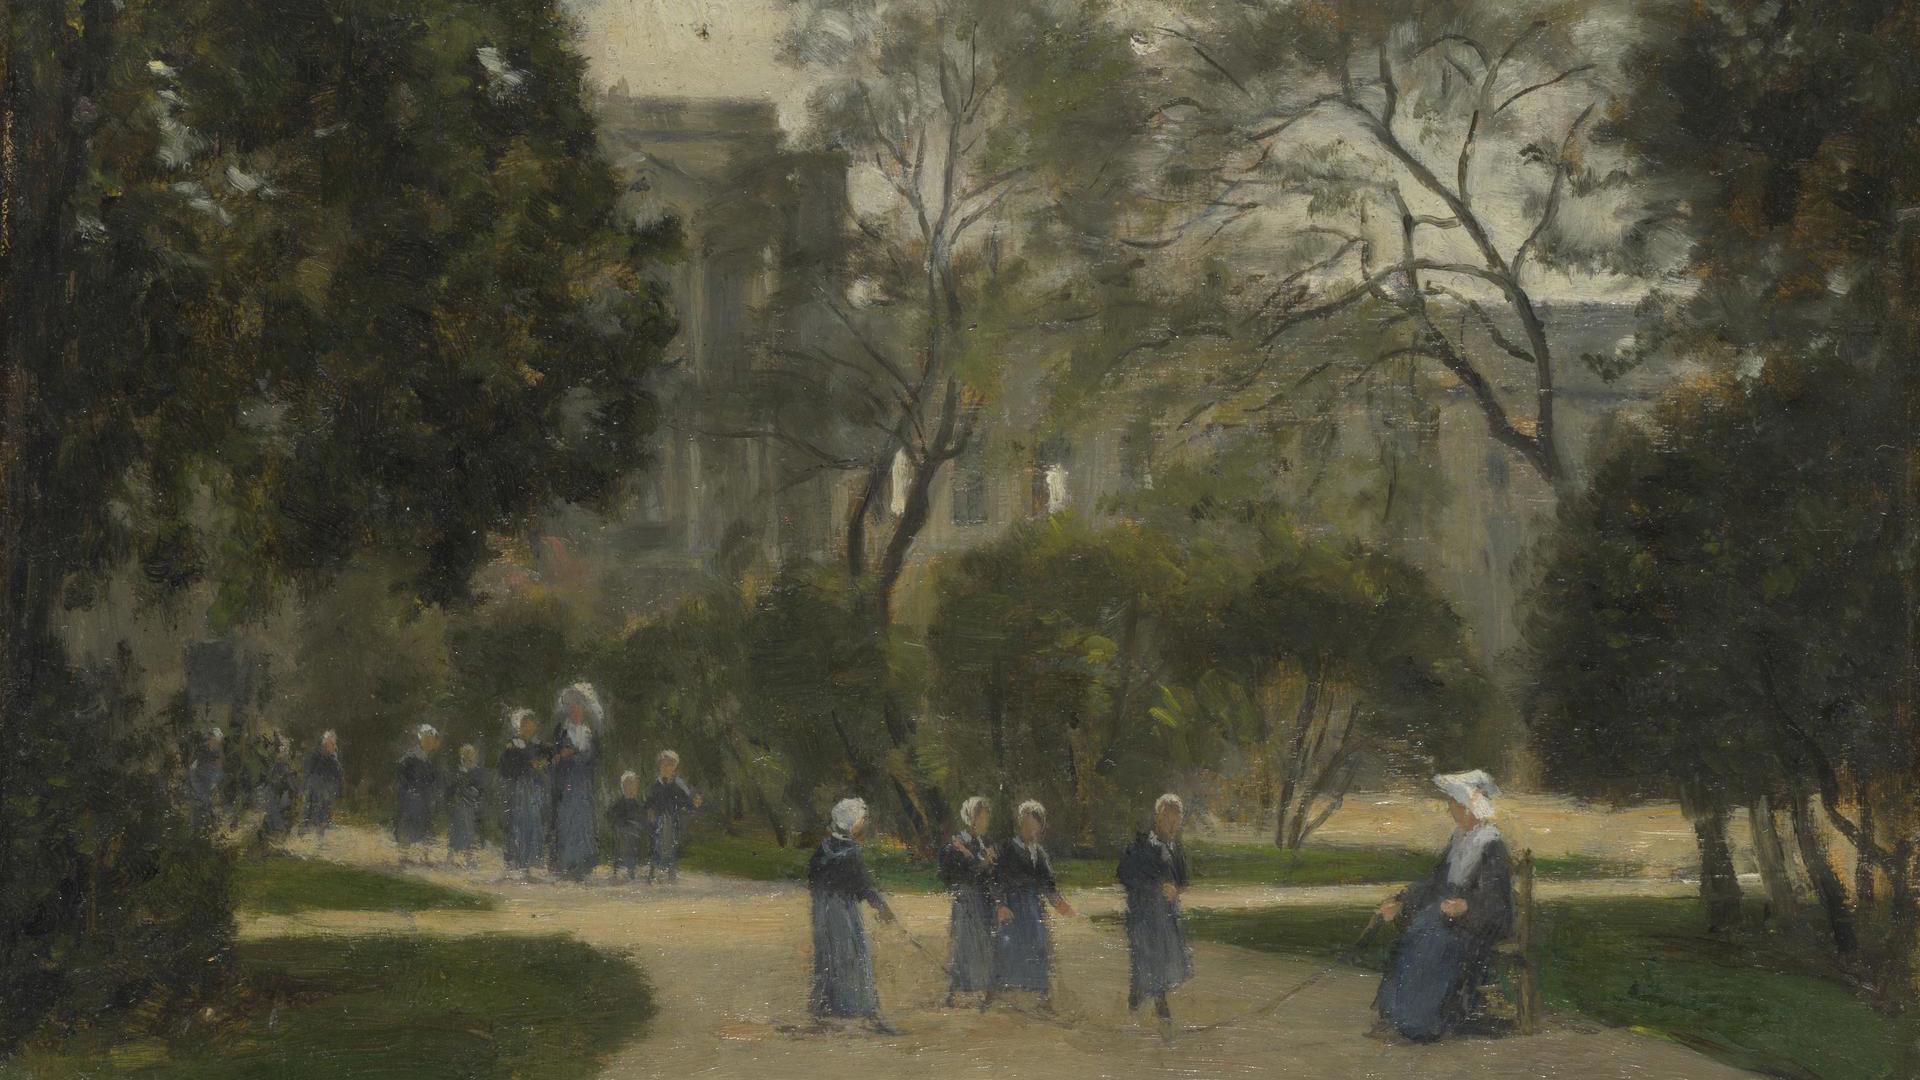 Nuns and Schoolgirls in the Tuileries Gardens, Paris by Stanislas-Victor-Edmond Lépine